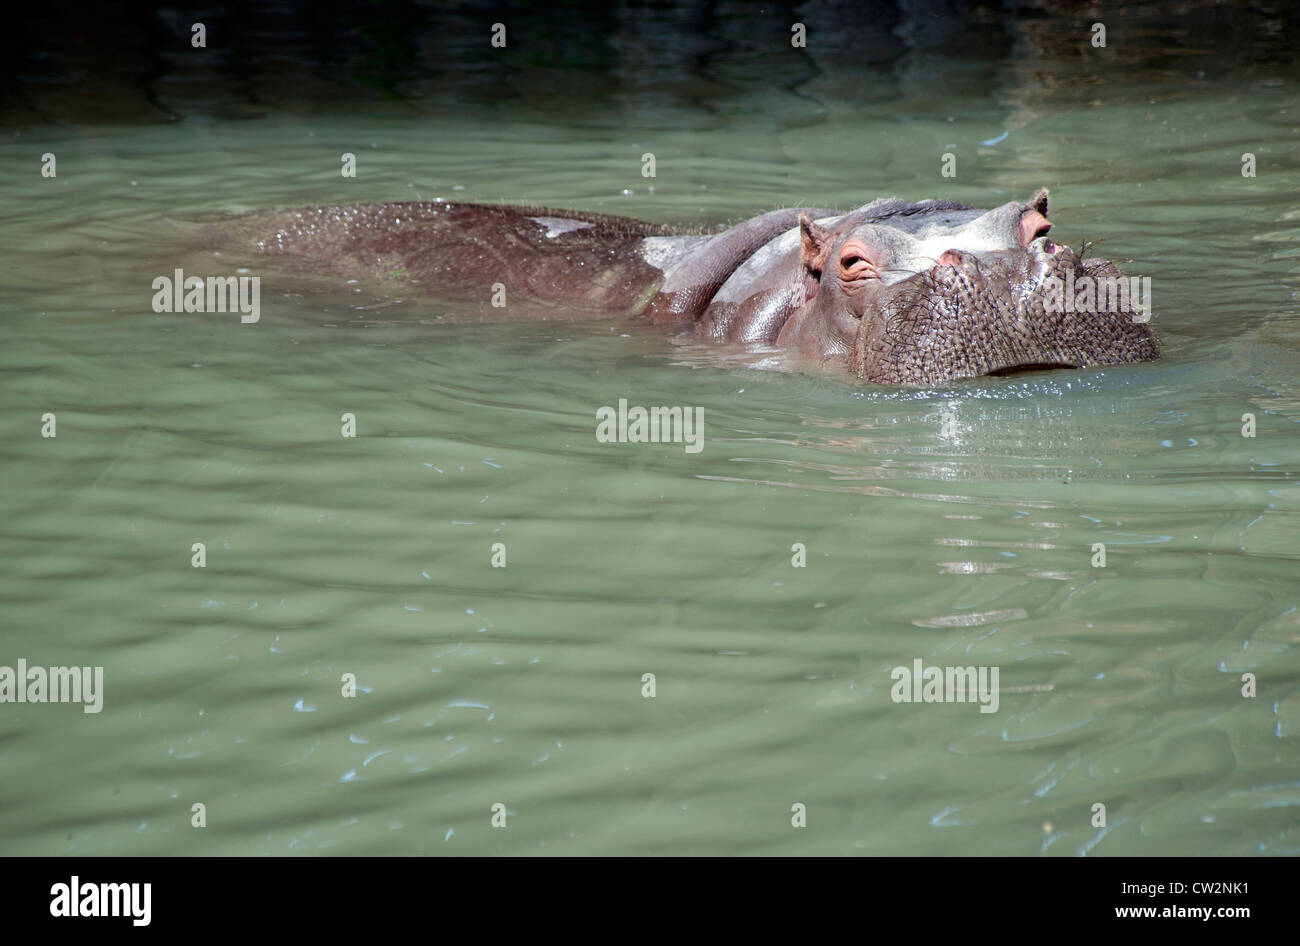 Hippopotamus wallowing in a lake Stock Photo